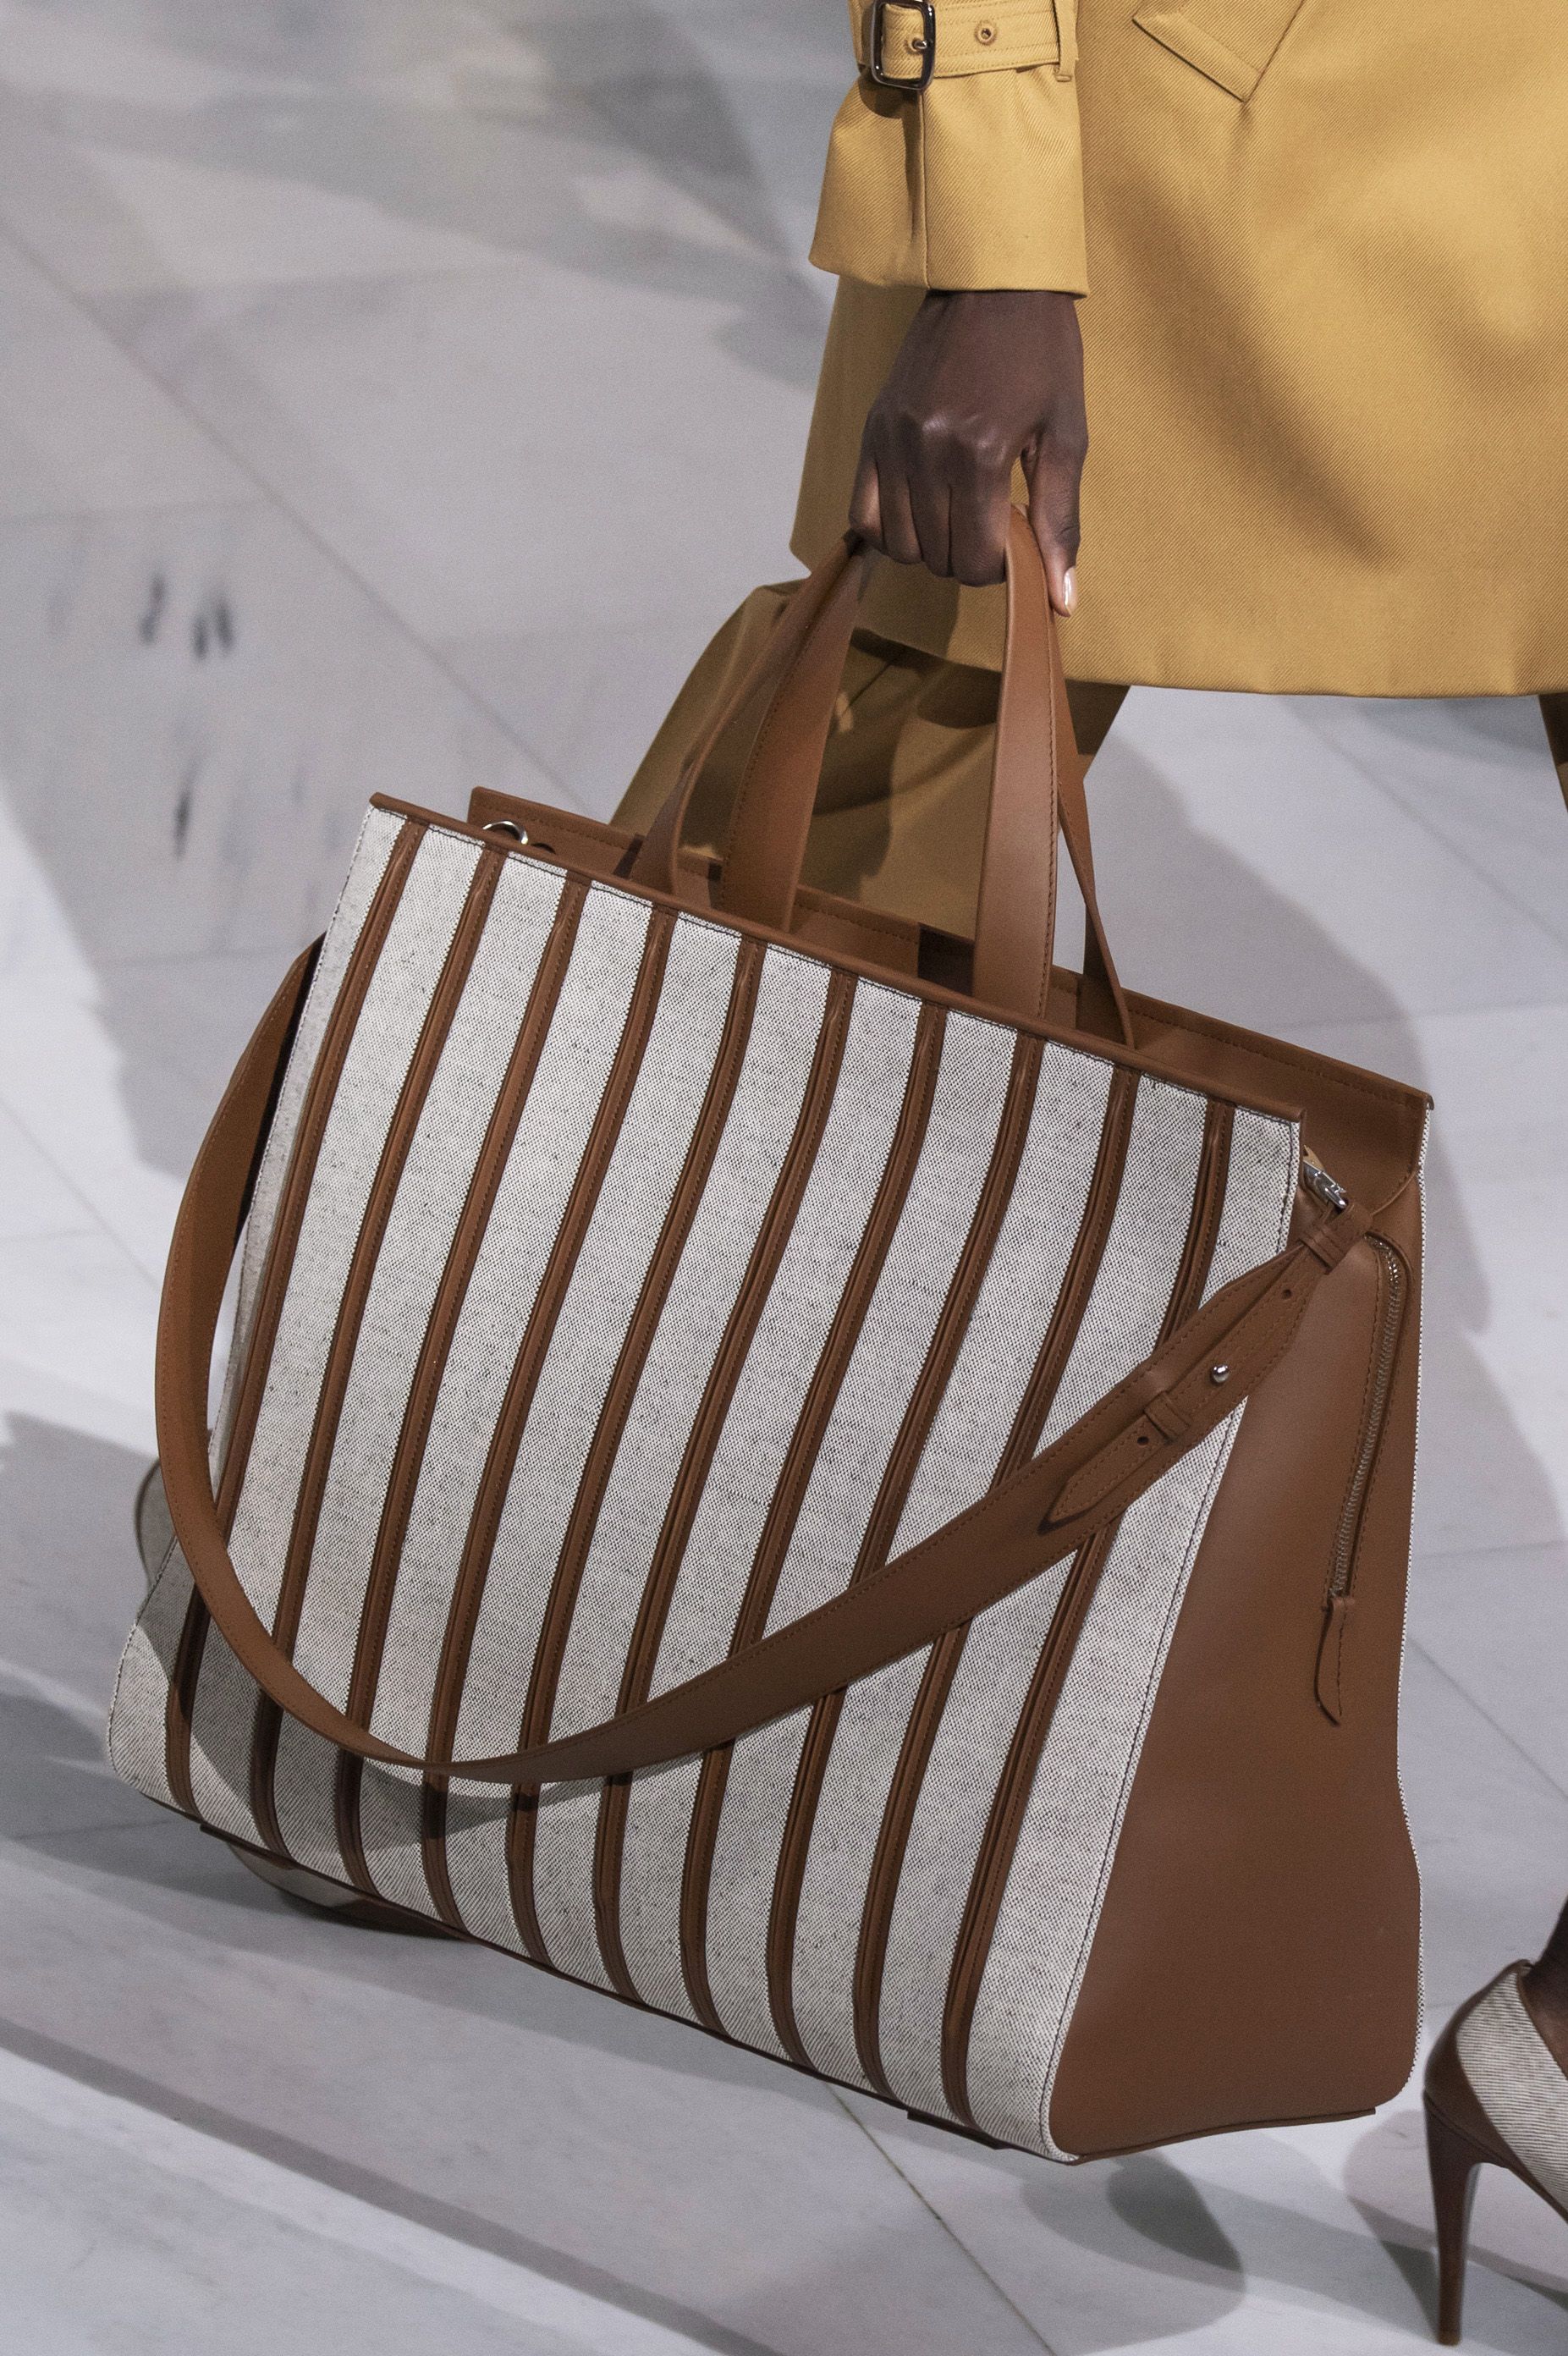 The 5 Designer Handbag Trends That Defined 2020